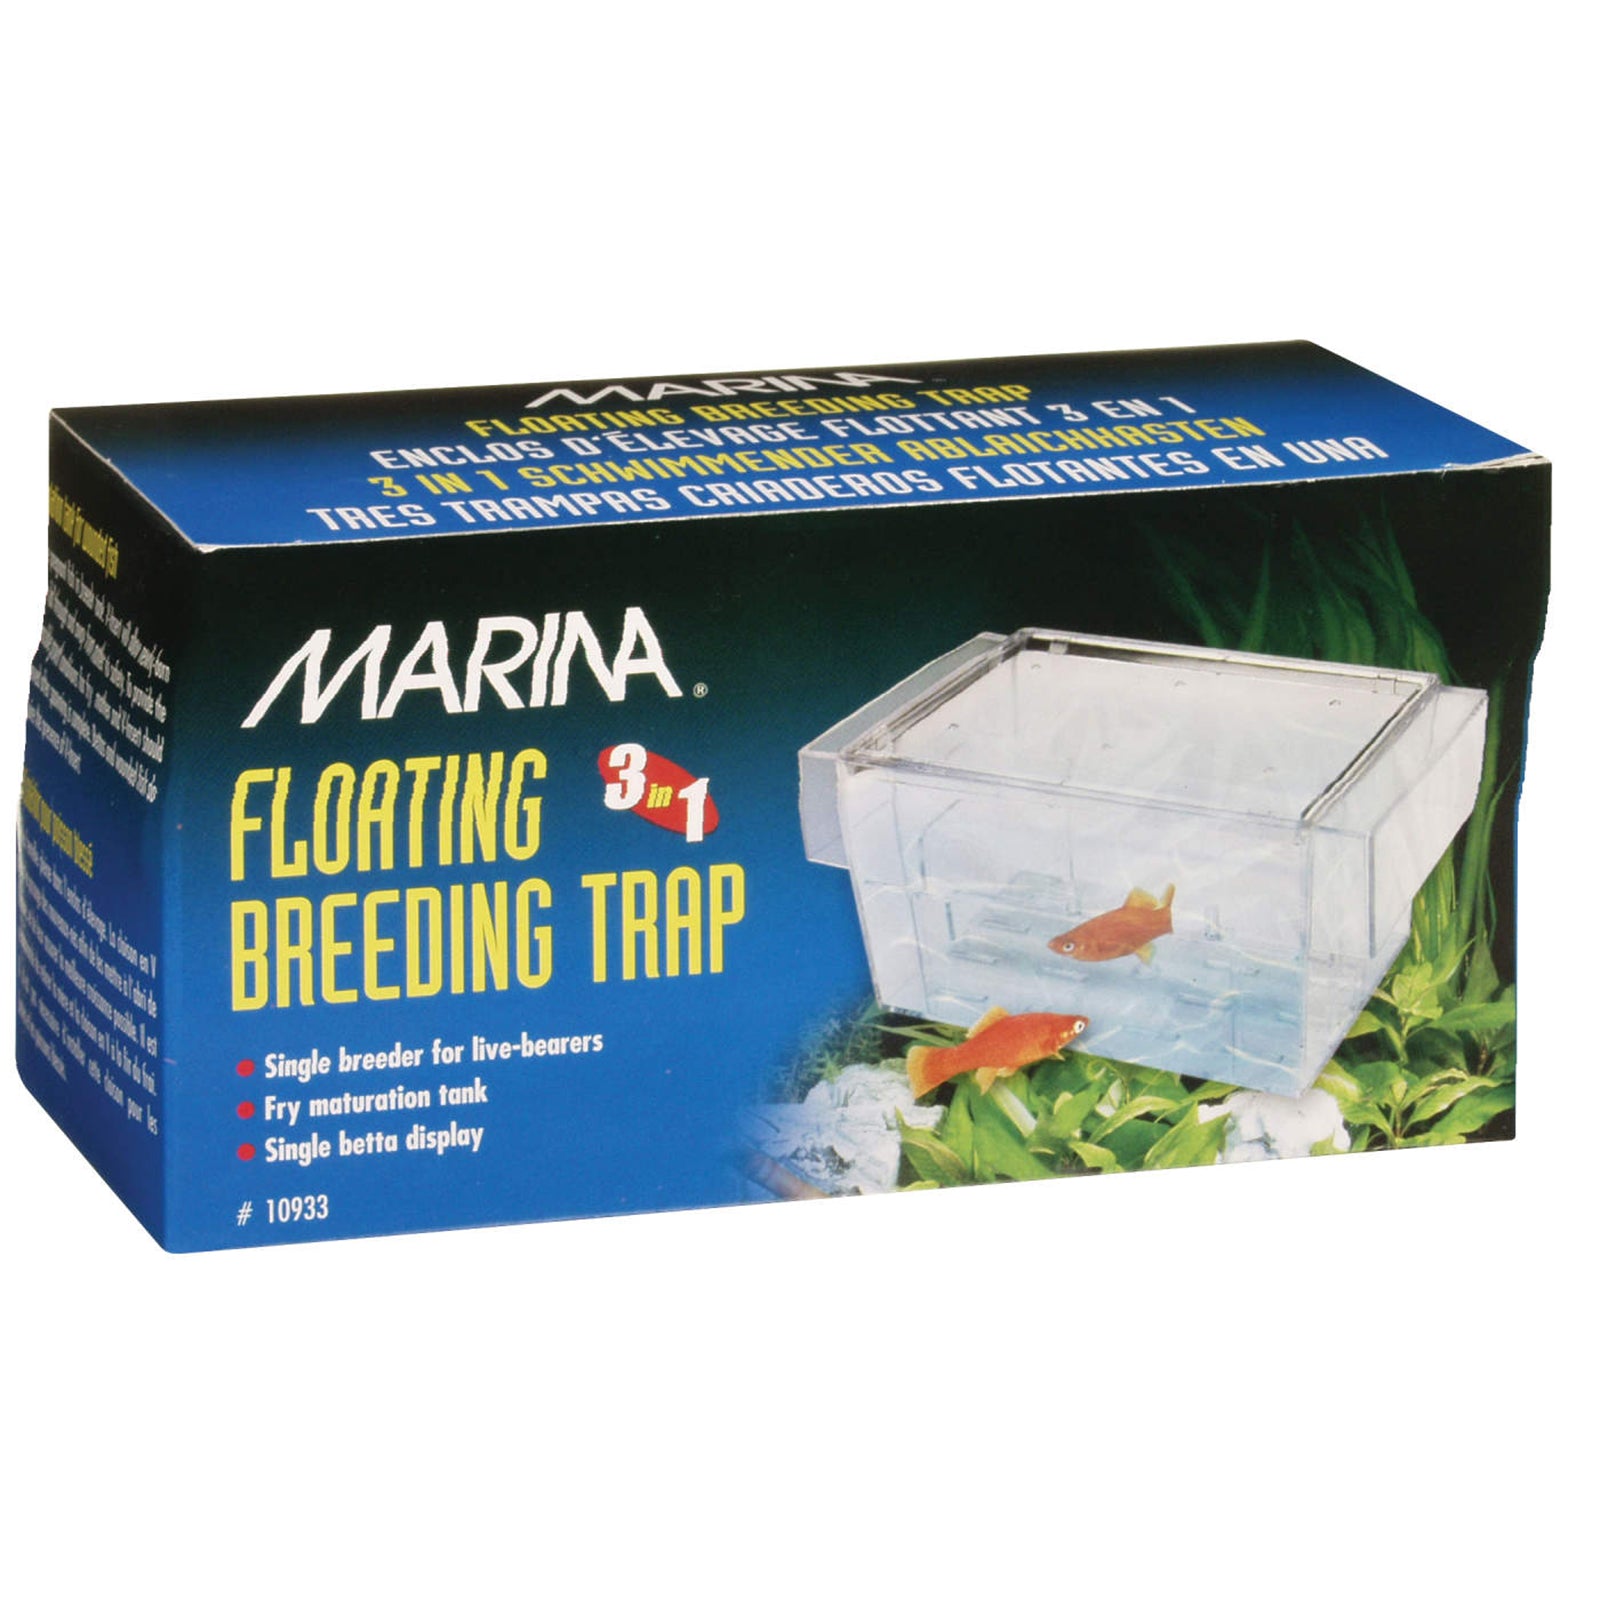 Marina Floating Breeding Tank 3 in 1